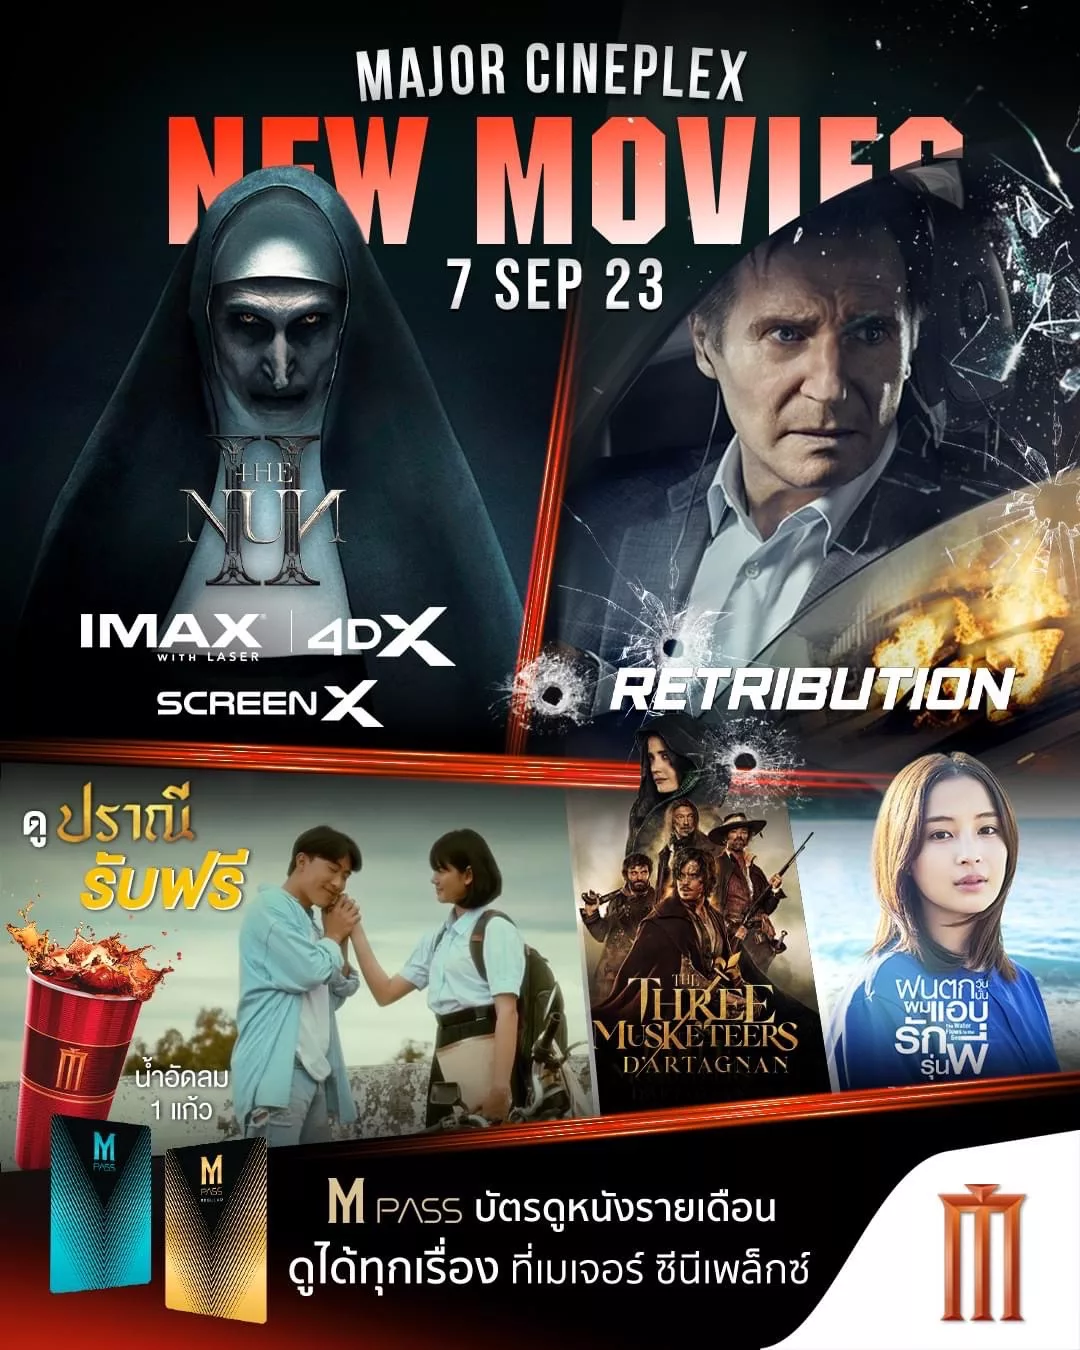 Major Cineplex  หนังใหม่ประจำสัปดาห์ 7 กันยายน 2566 มาดูกันว่าสัปดาห์นี้มีหนังอะไรบ้าง ใช่เรื่องที่ทุกคนรอคอยอยู่รึเปล่า